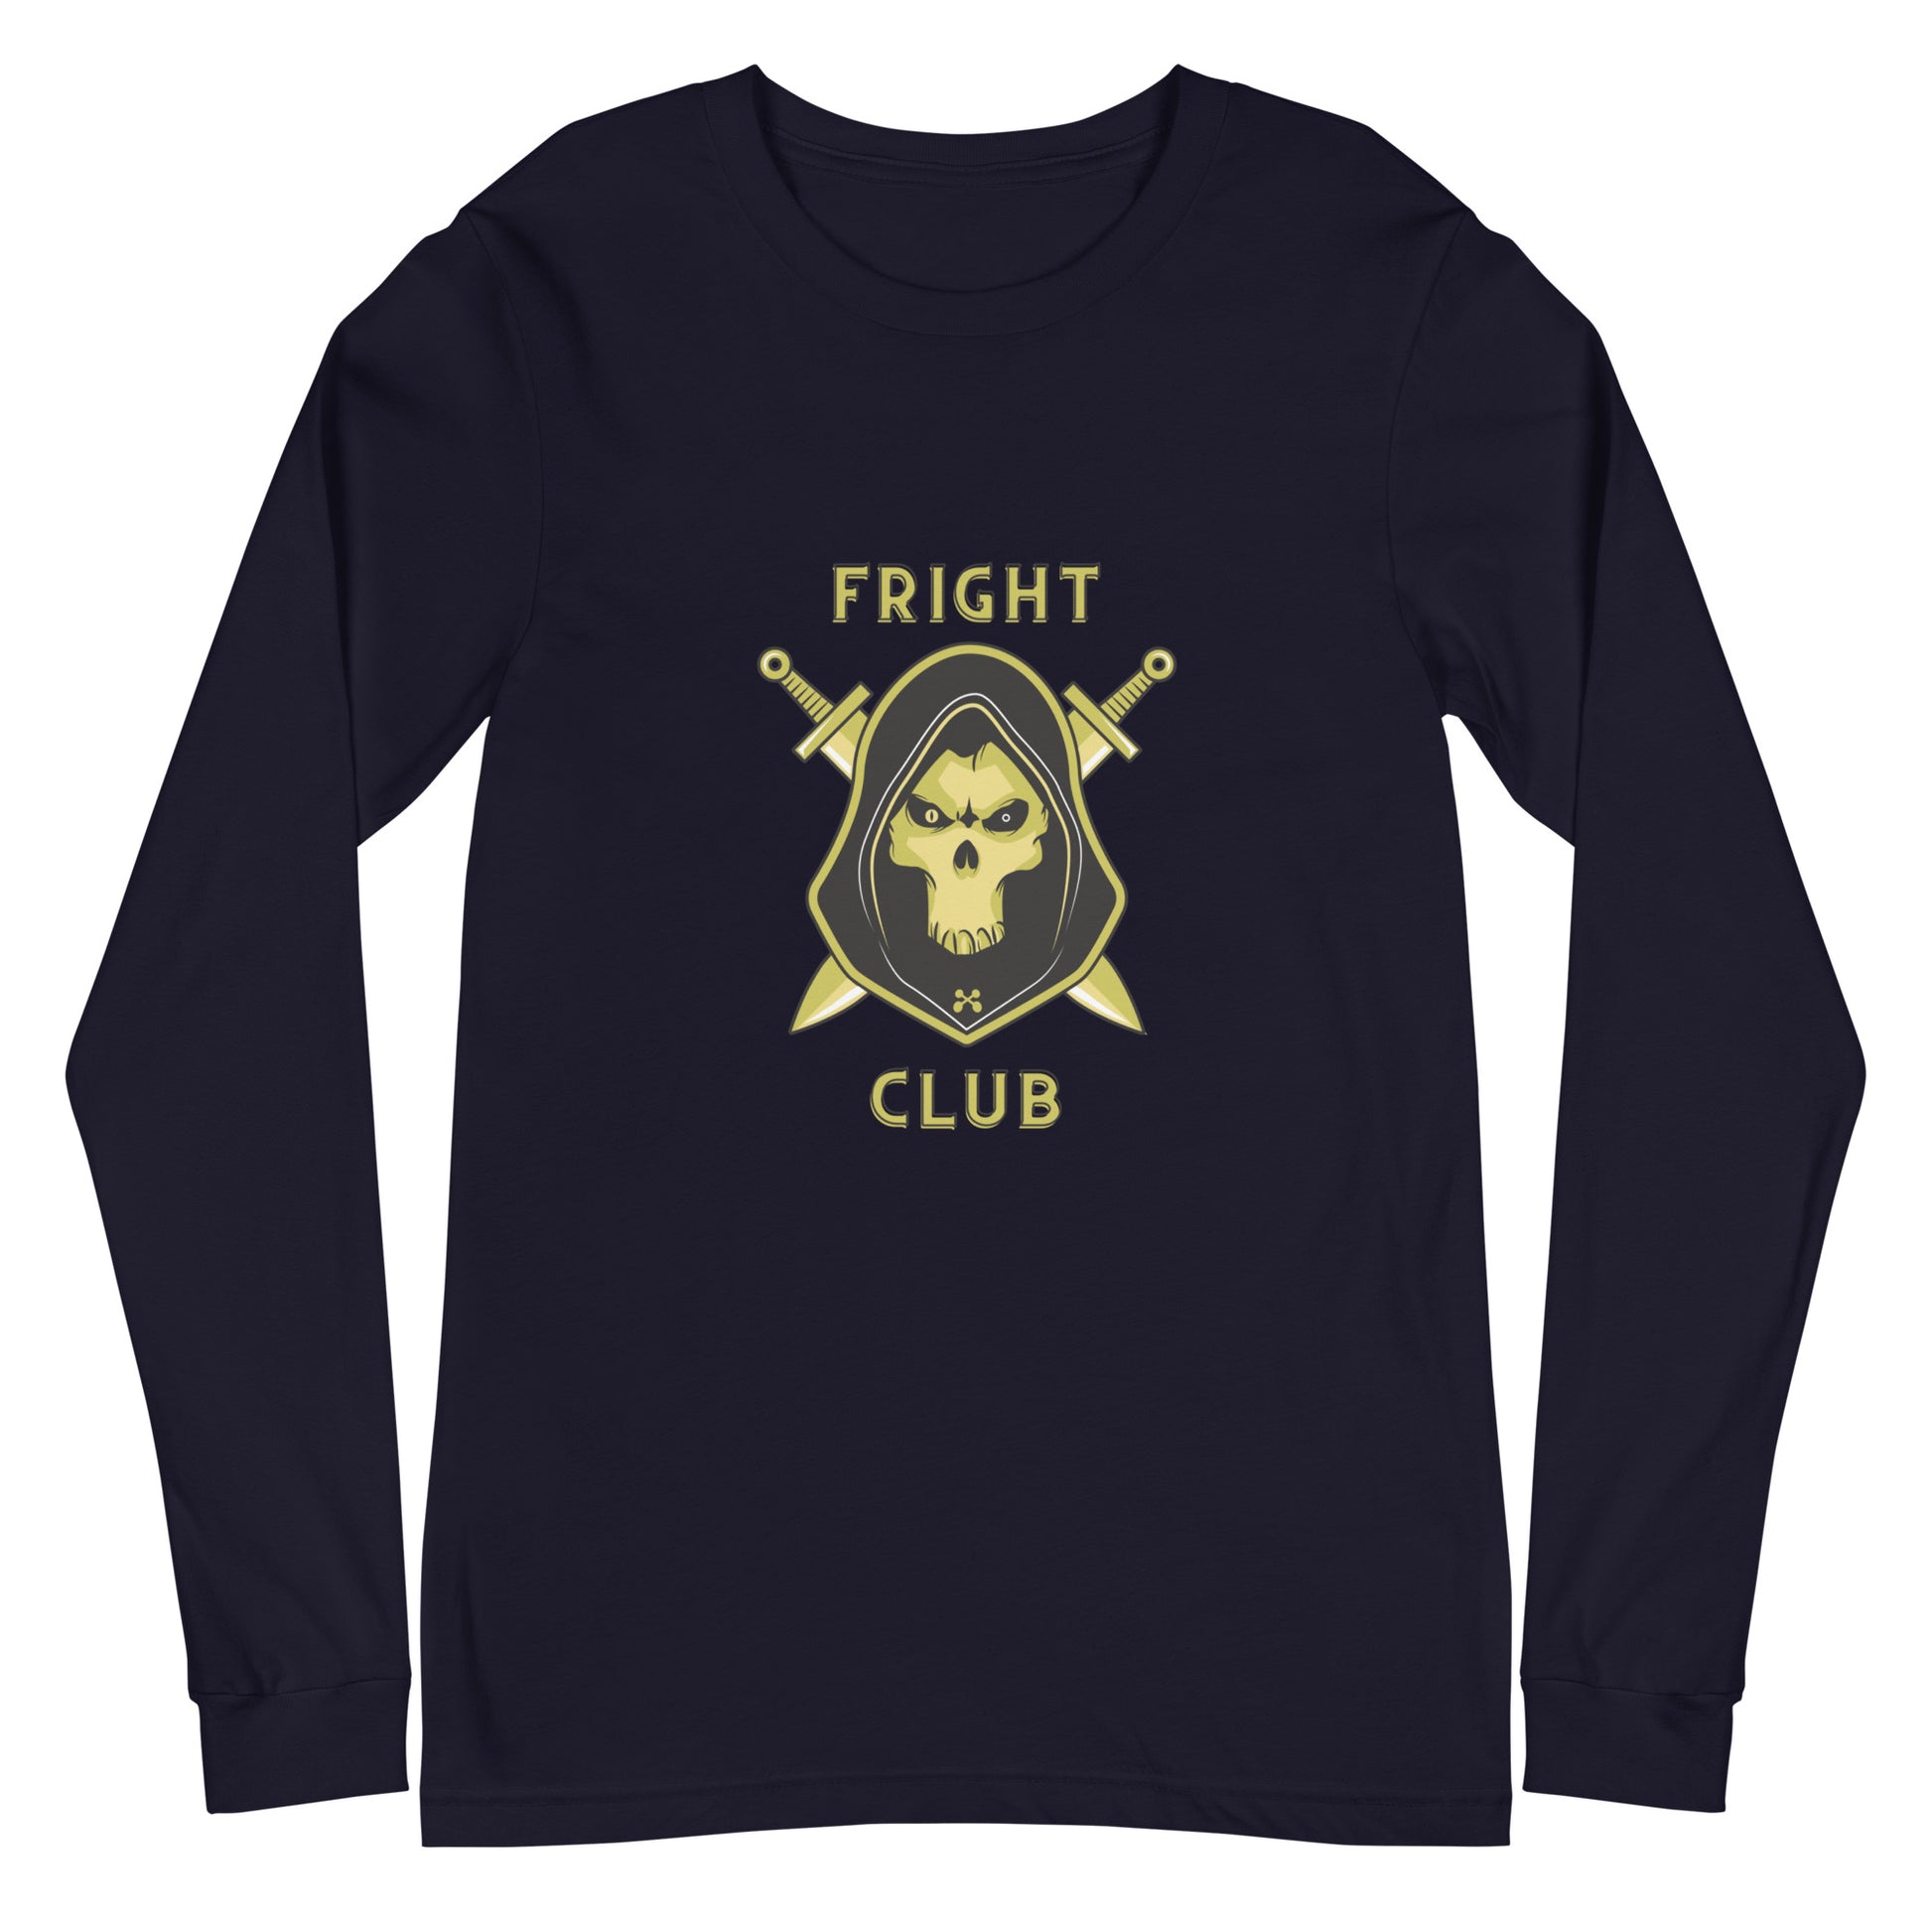 Fright Club Unisex Long Sleeve Tee - A. Mandaline Art